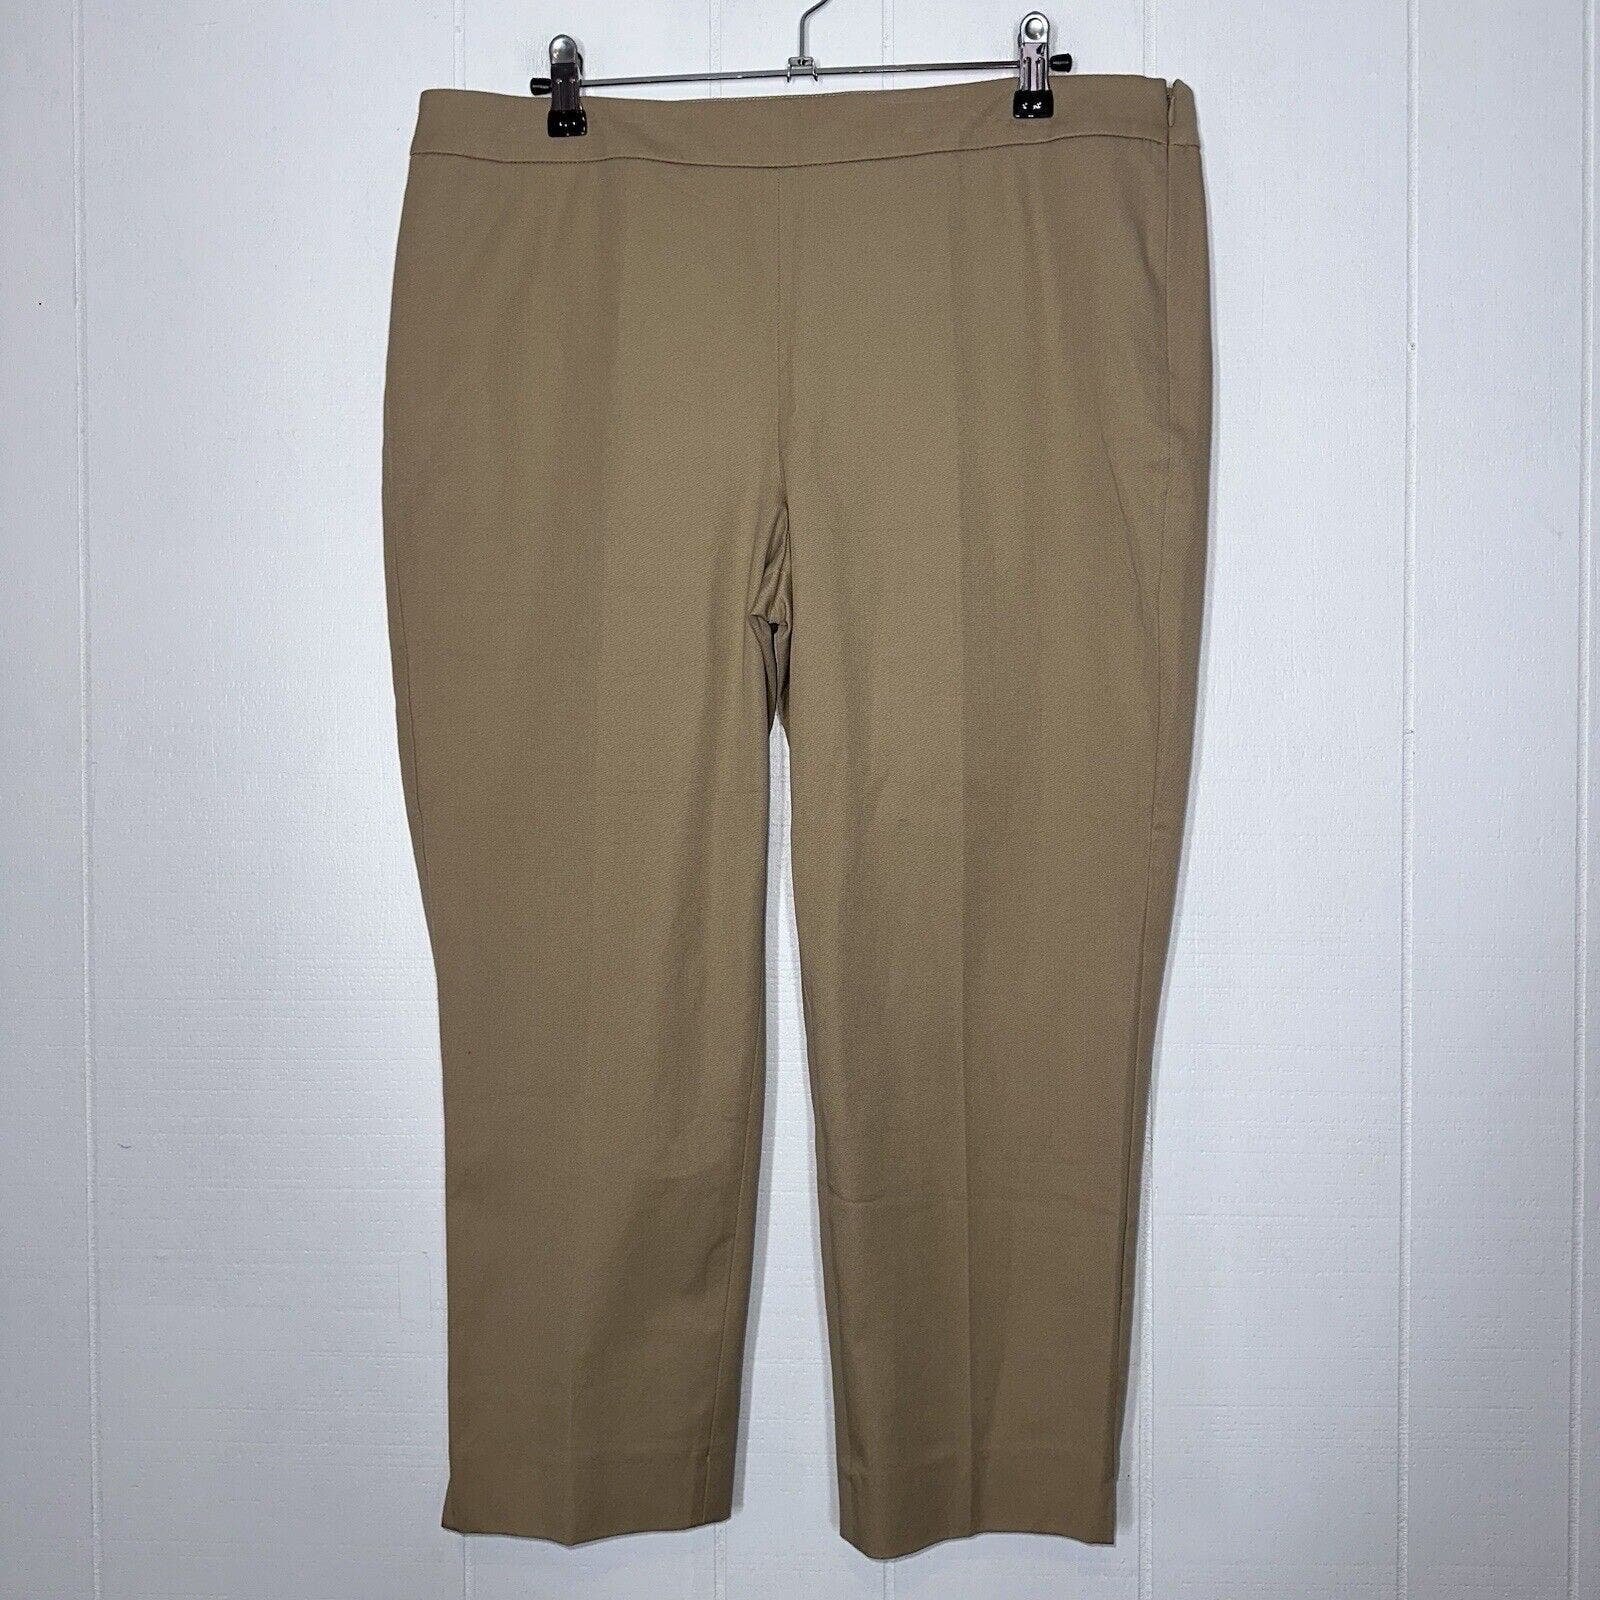 Discounted Talbots Women’s Chatham Crop Khaki Pants Siz